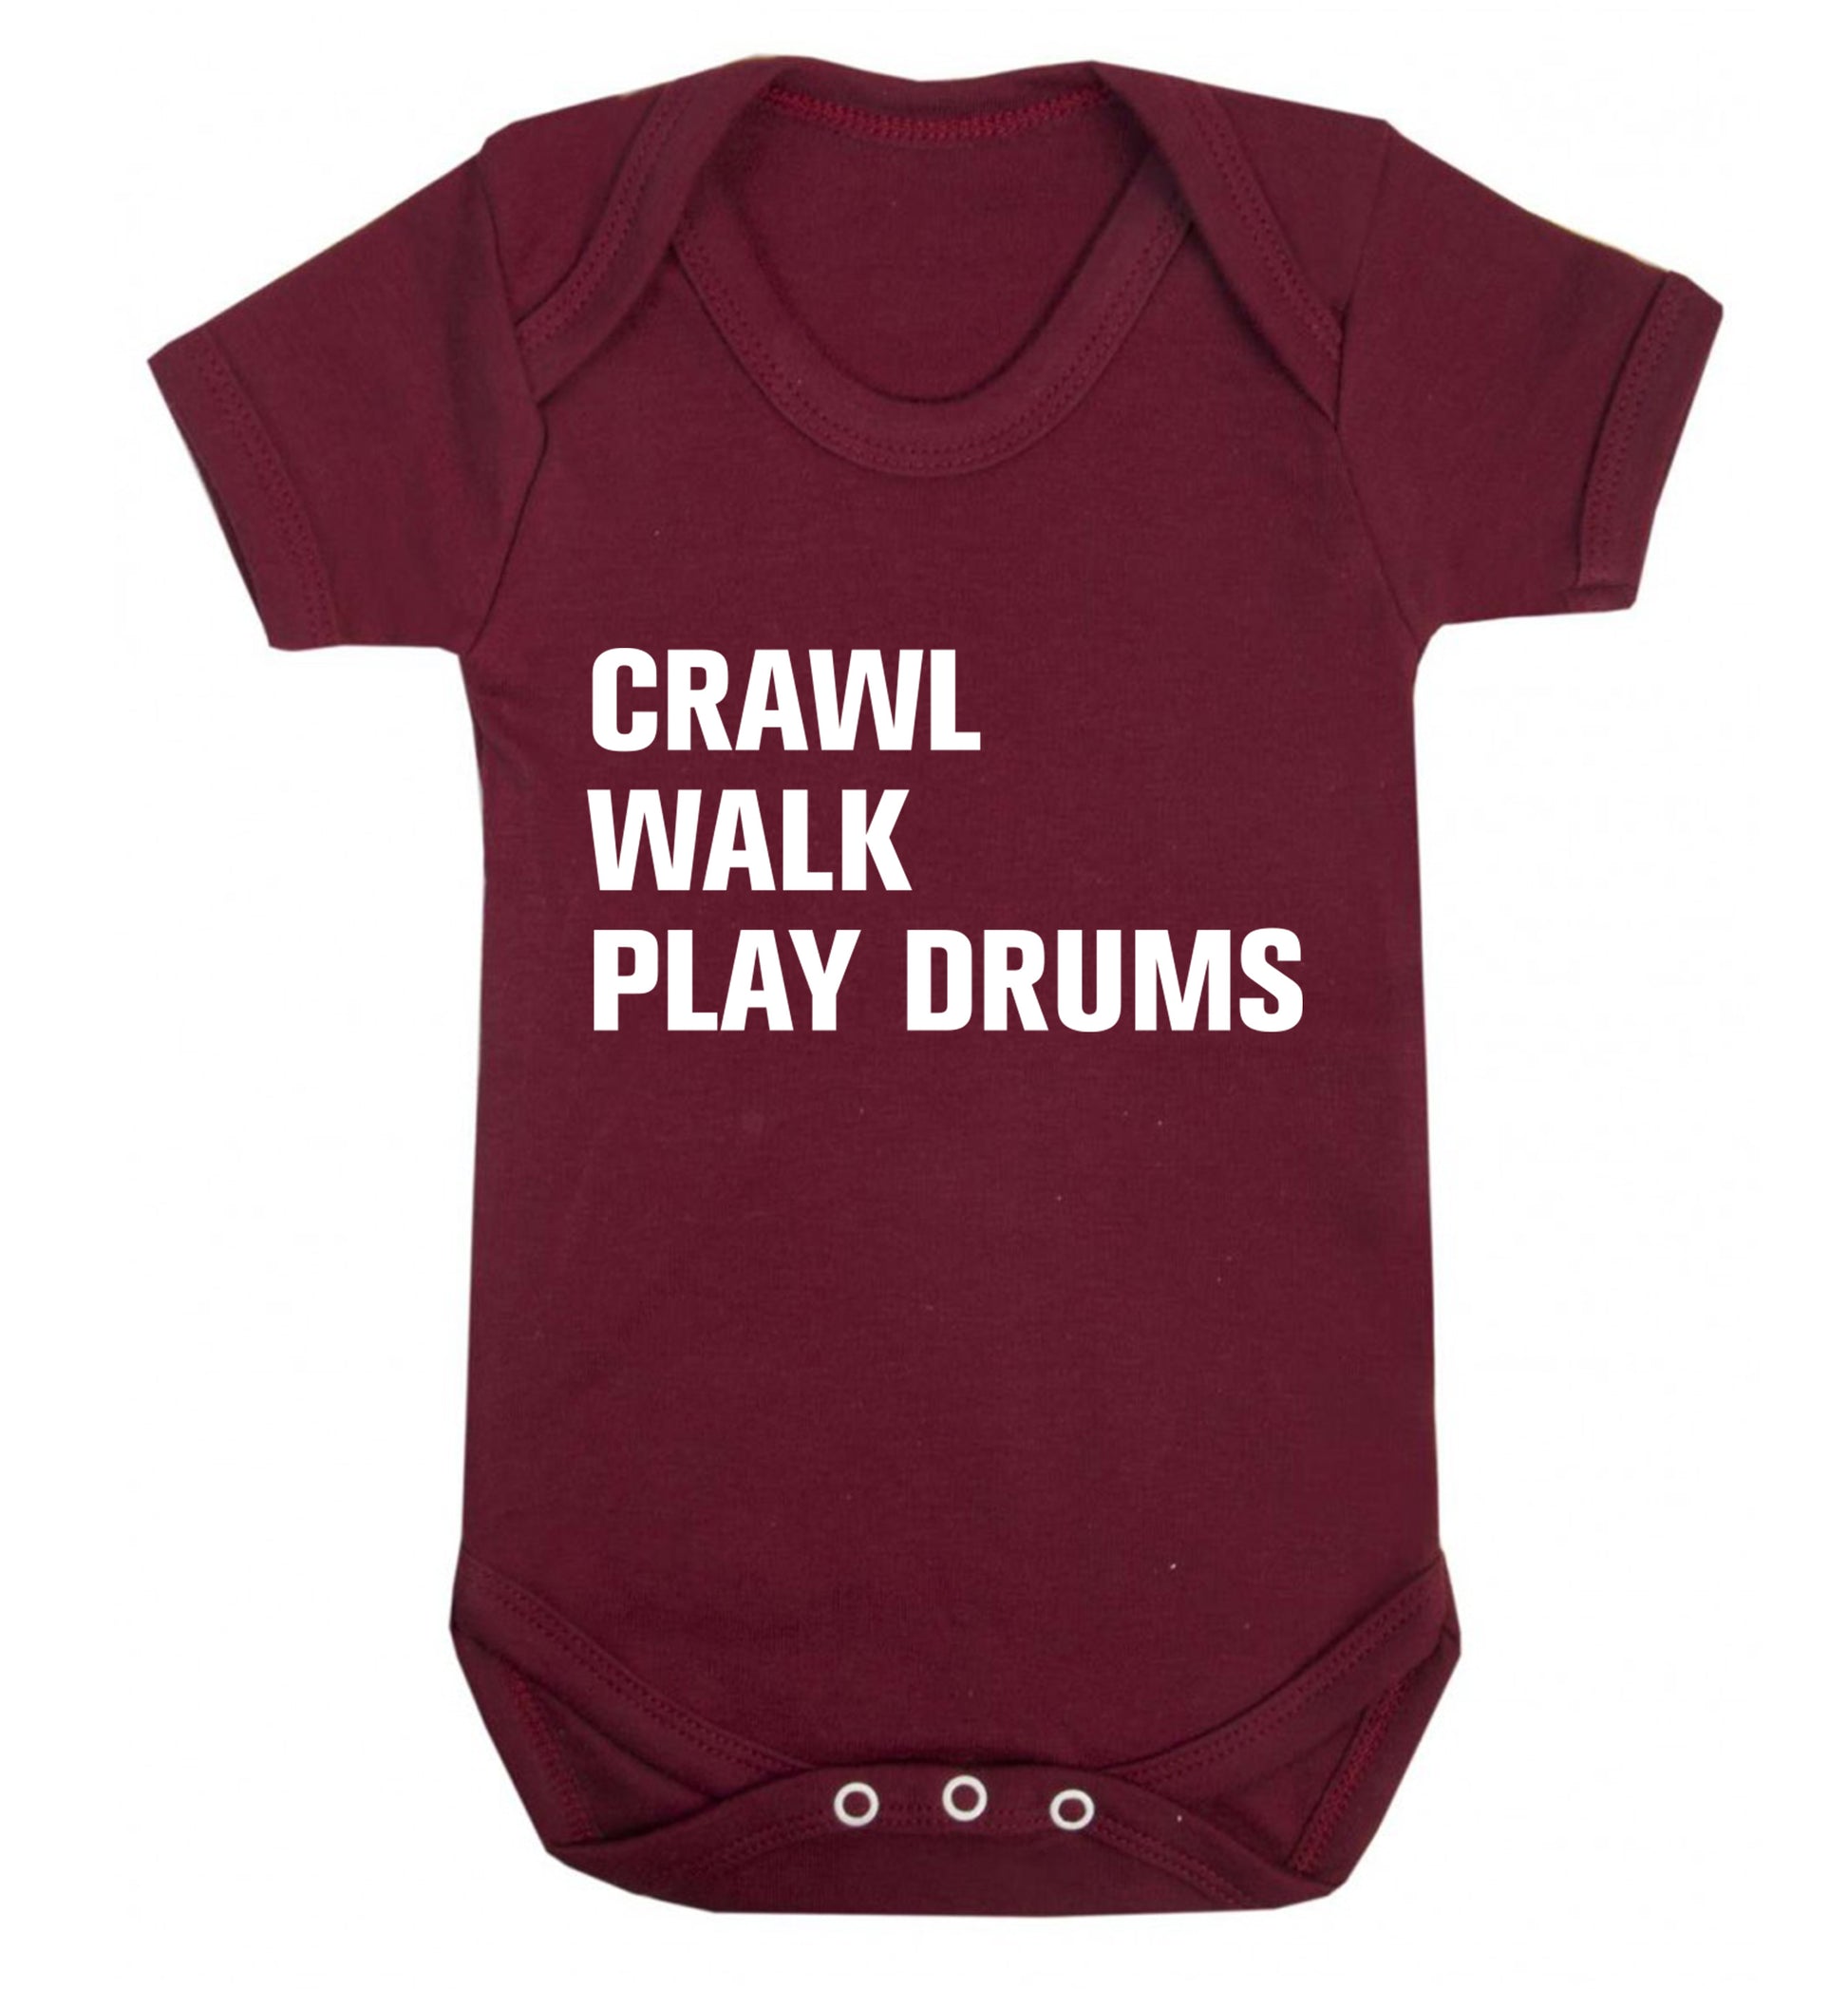 Crawl walk play drums Baby Vest maroon 18-24 months